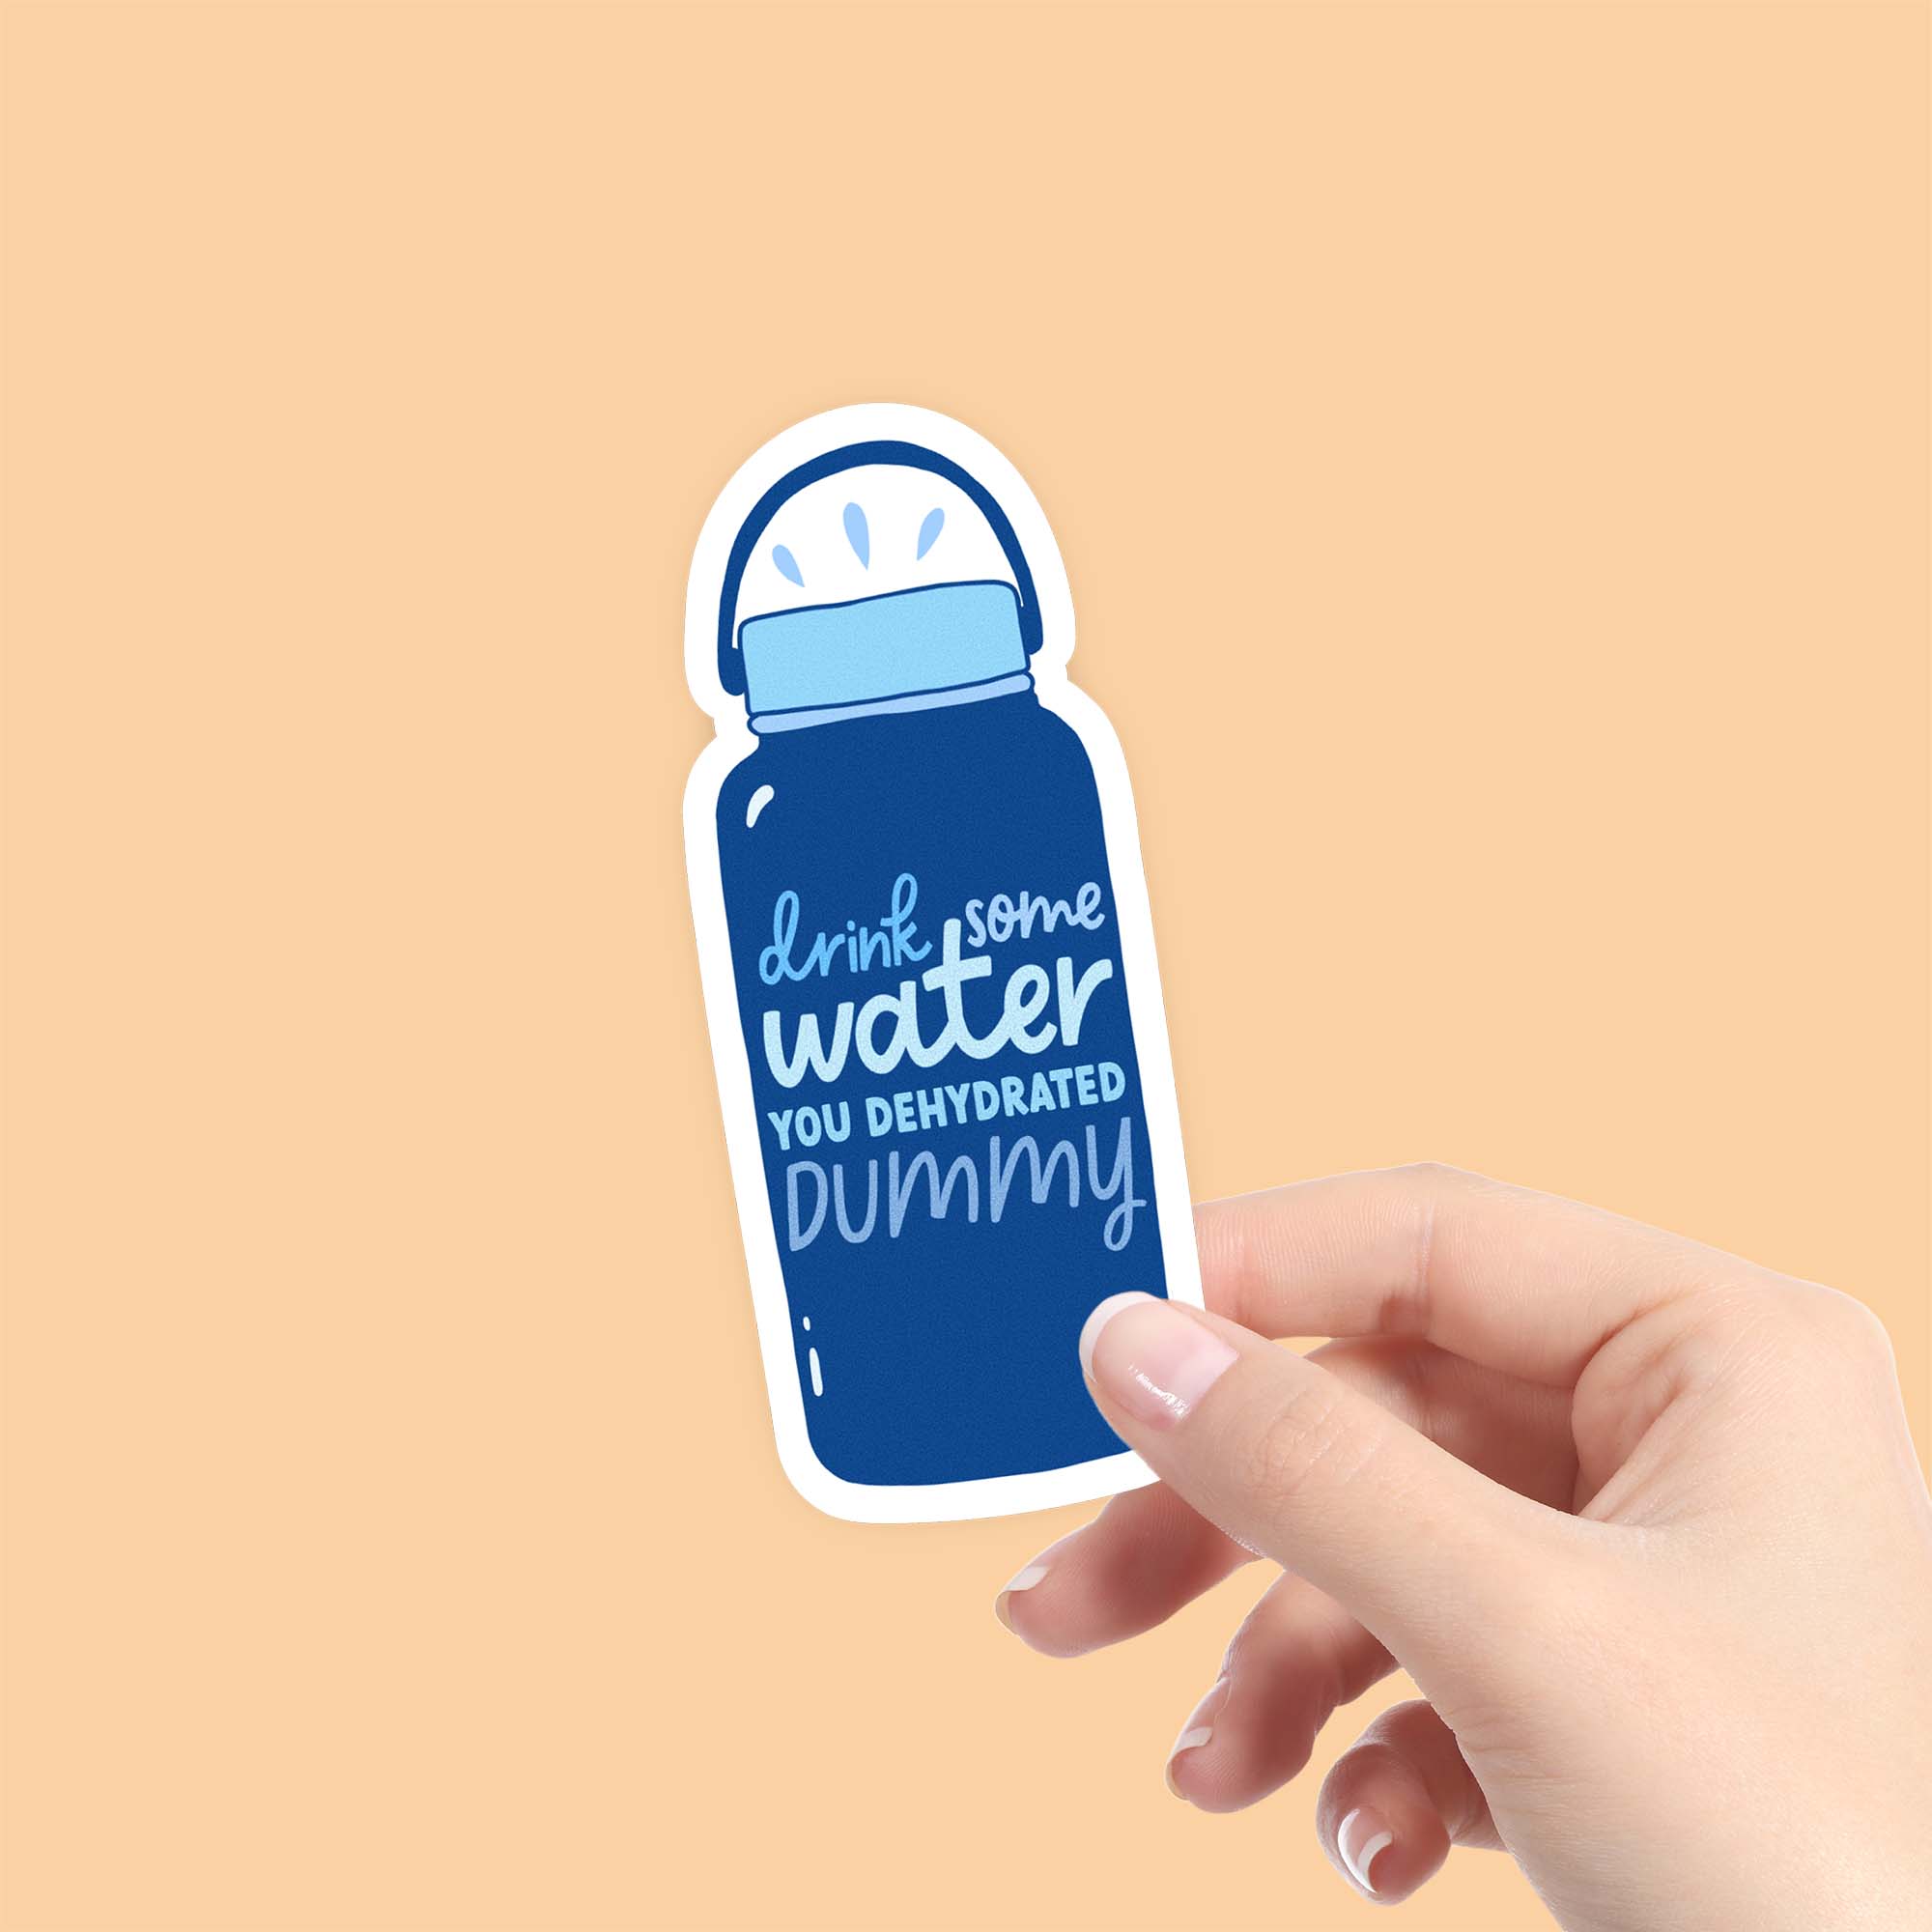 Drink more water sticker – Big Moods